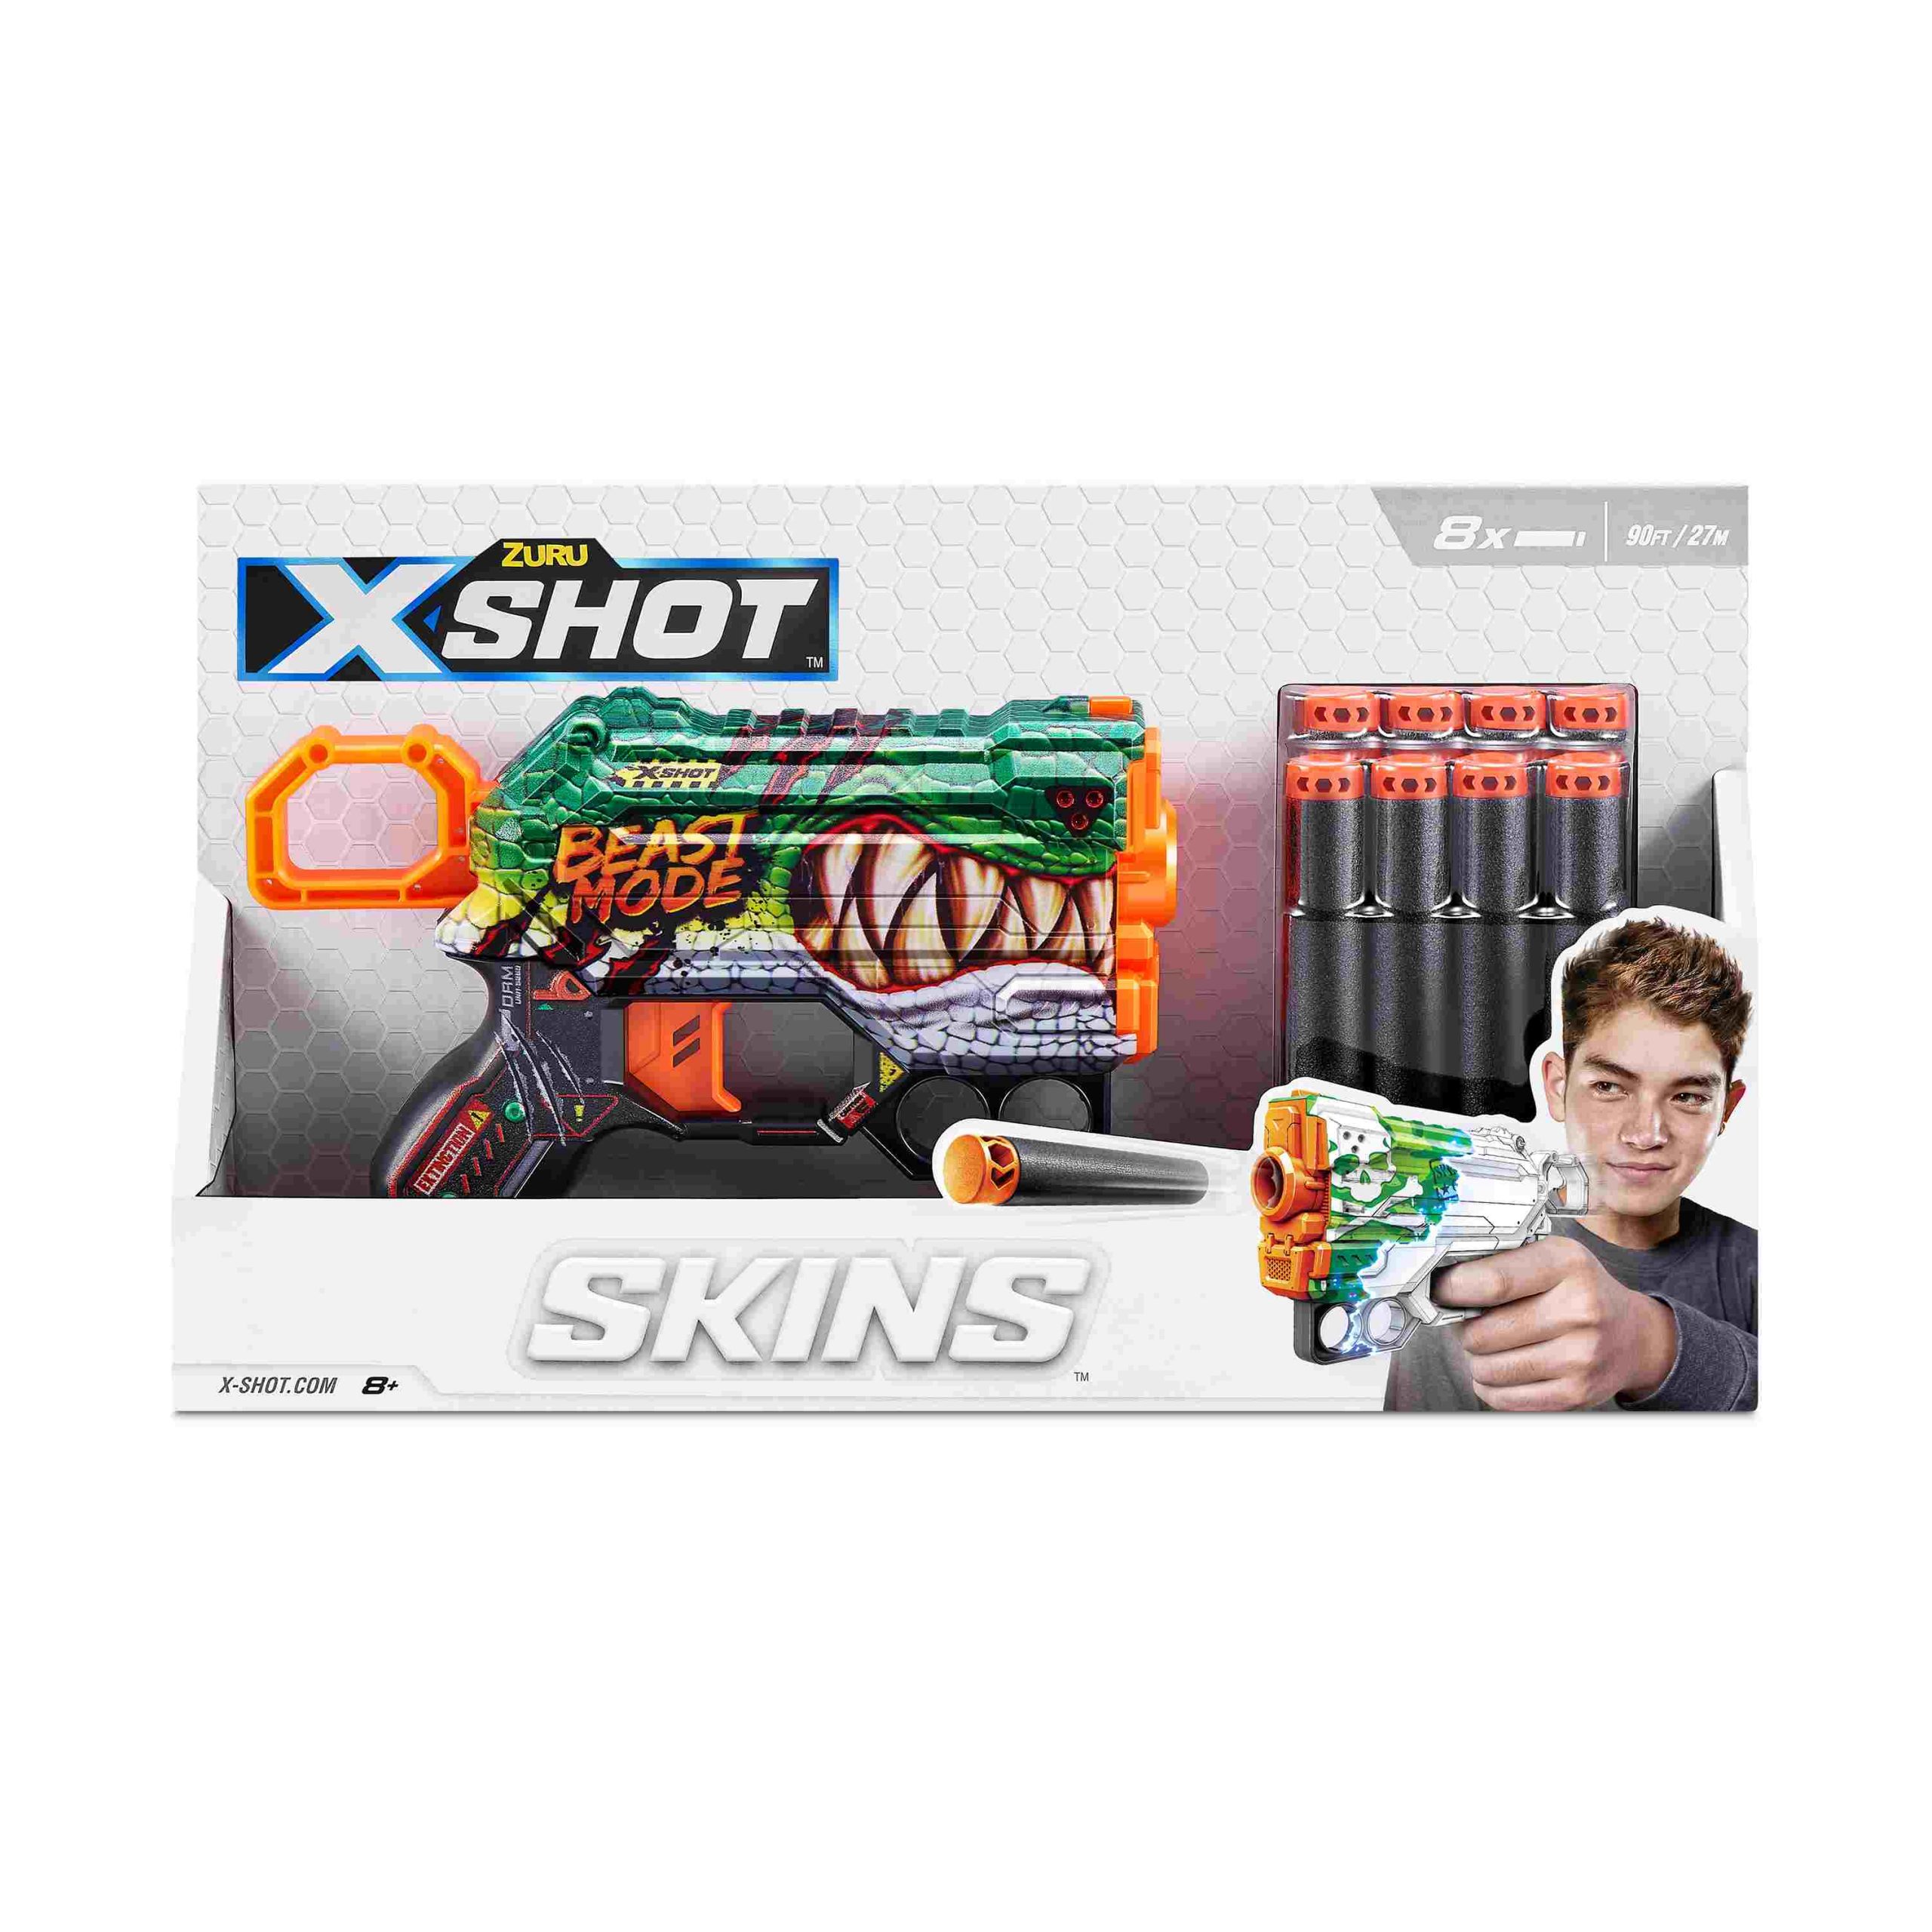 Xshot skins menace beast mode - SUN&SPORT ORIG, X-SHOT